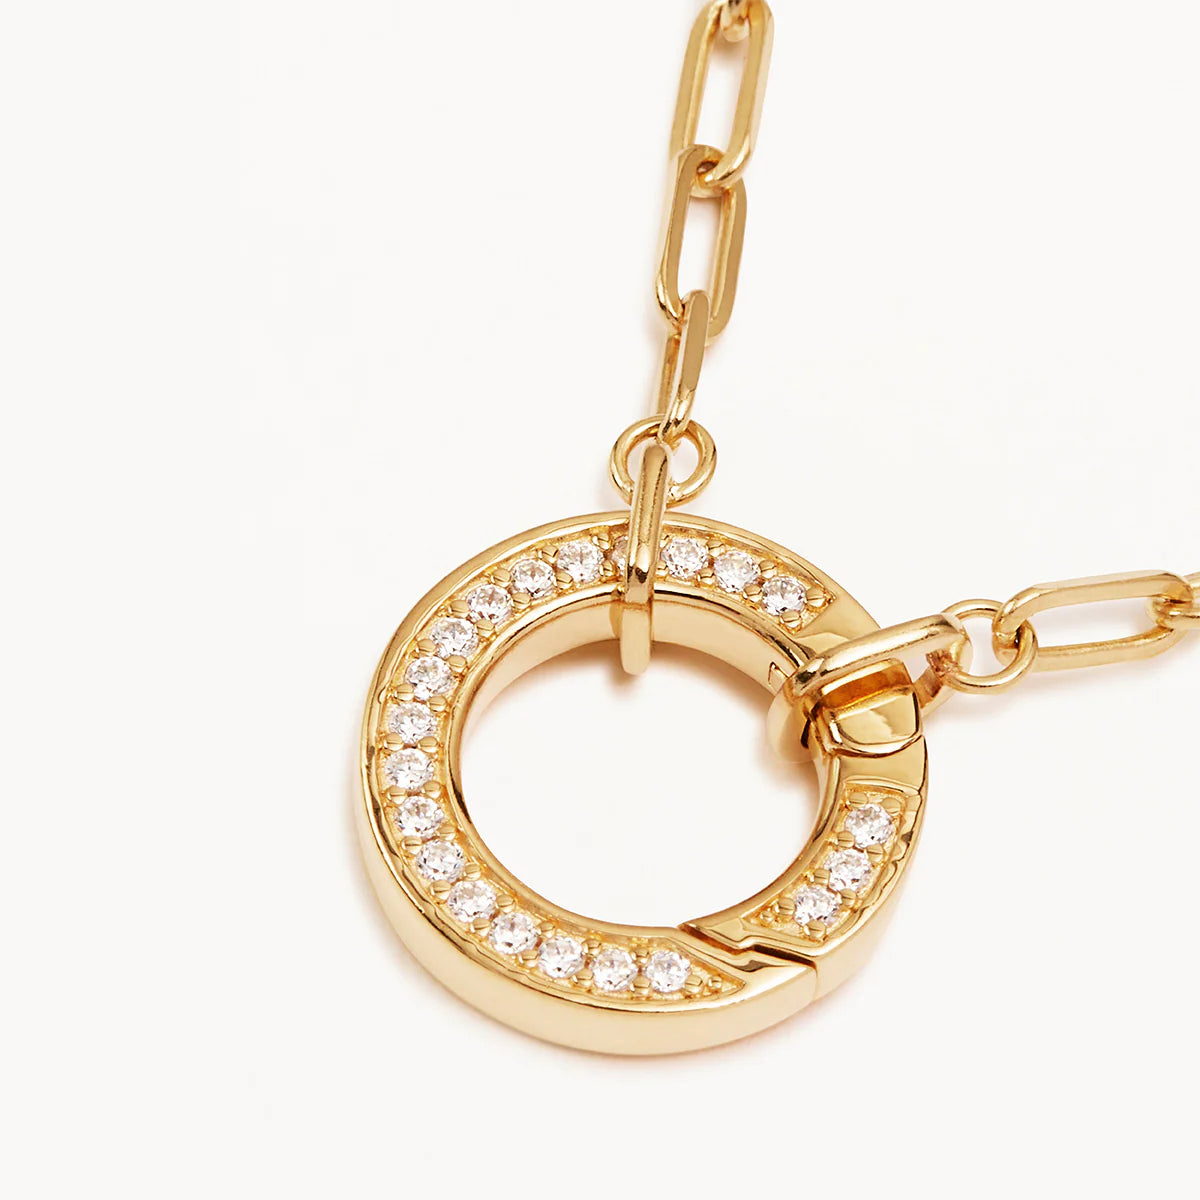 By Charlotte - Celestial Annex Link Necklace 18k Gold Vermeil